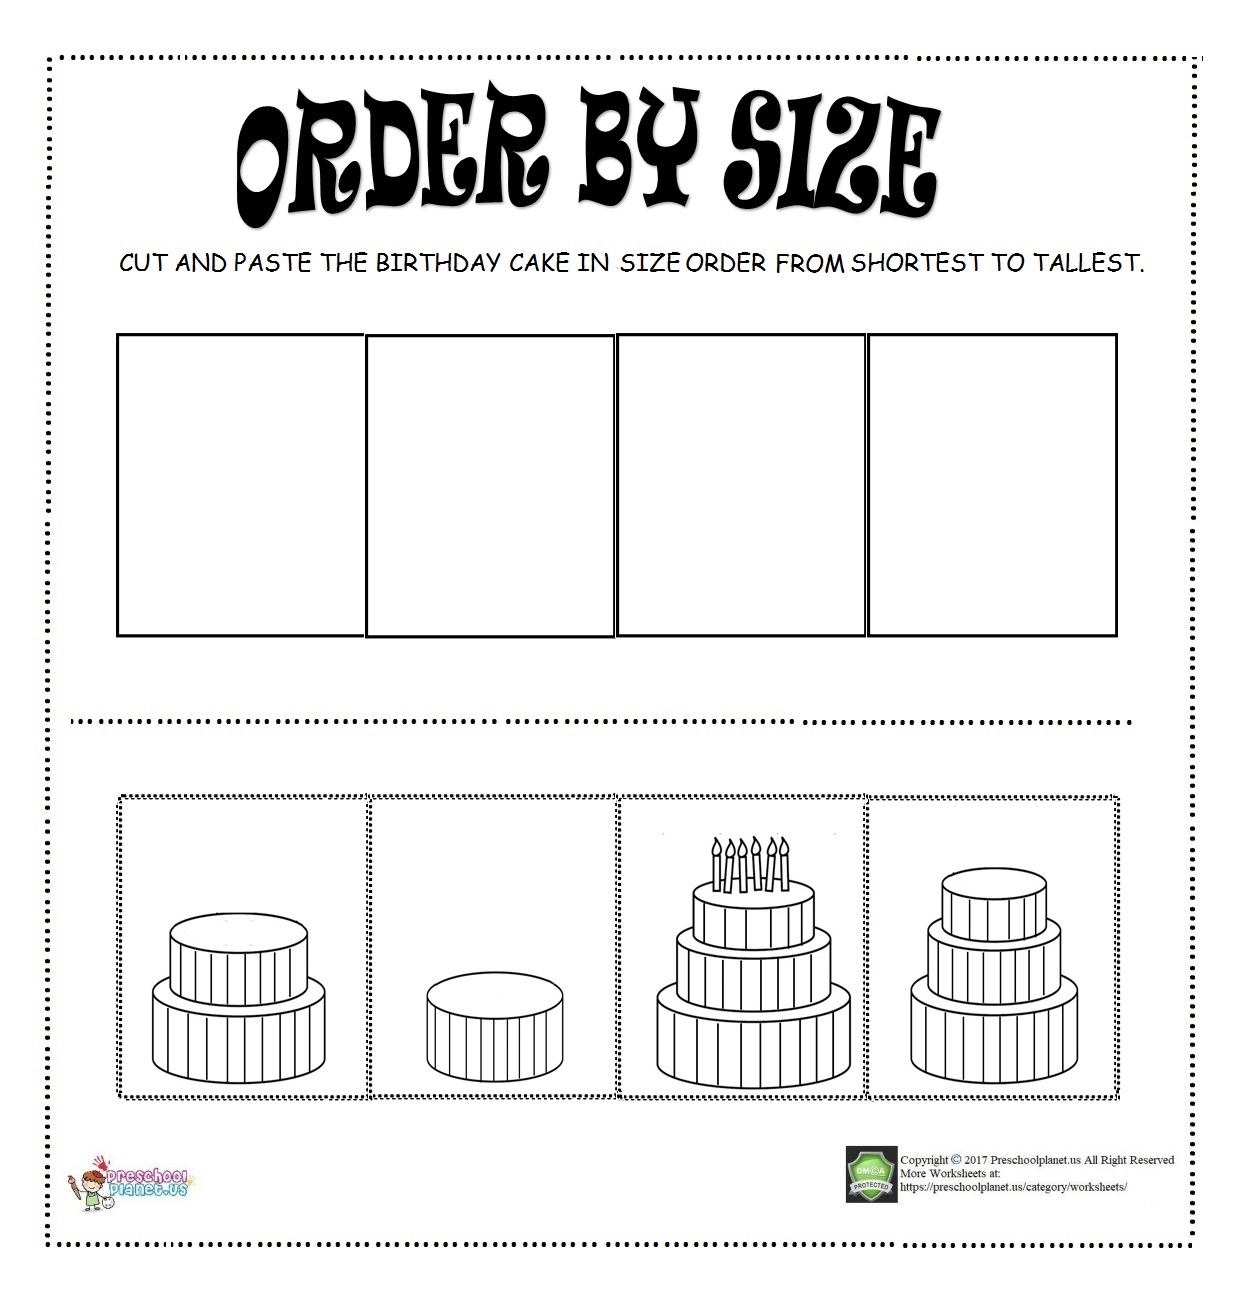 order by size worksheet for kids preschoolplanet